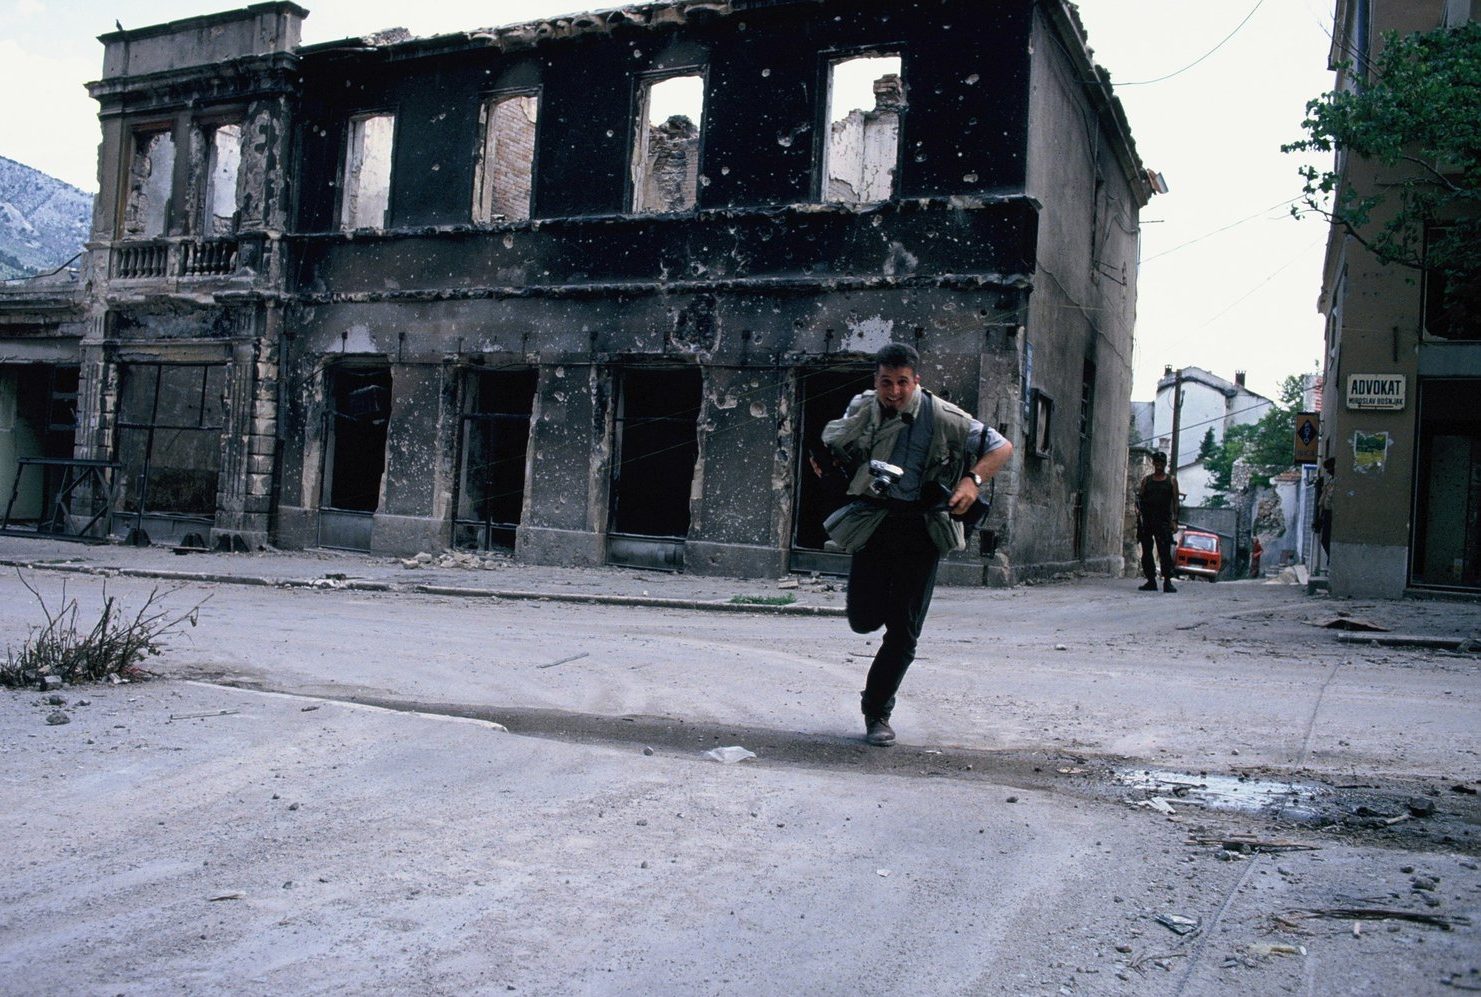 Andrew Reid, Photographer Gary Knight in Mostar, Bosnia, 1993. Photograph courtesy of Andrew Reid.